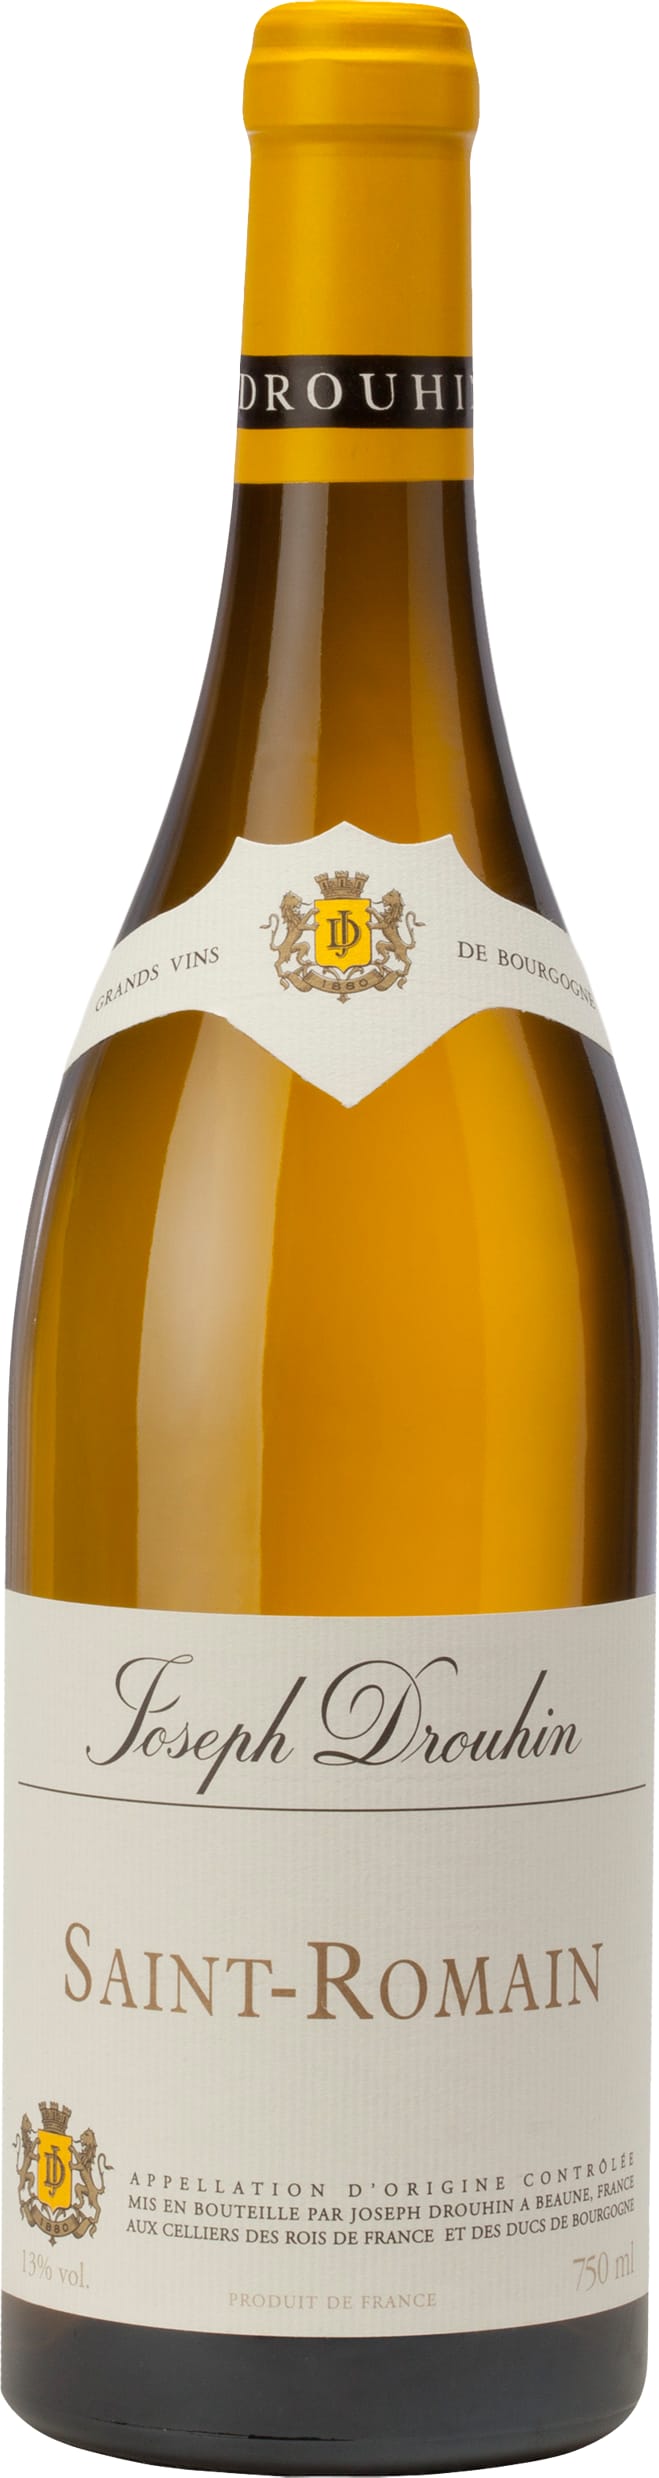 Joseph Drouhin Saint-Romain 2021 75cl - Buy Joseph Drouhin Wines from GREAT WINES DIRECT wine shop